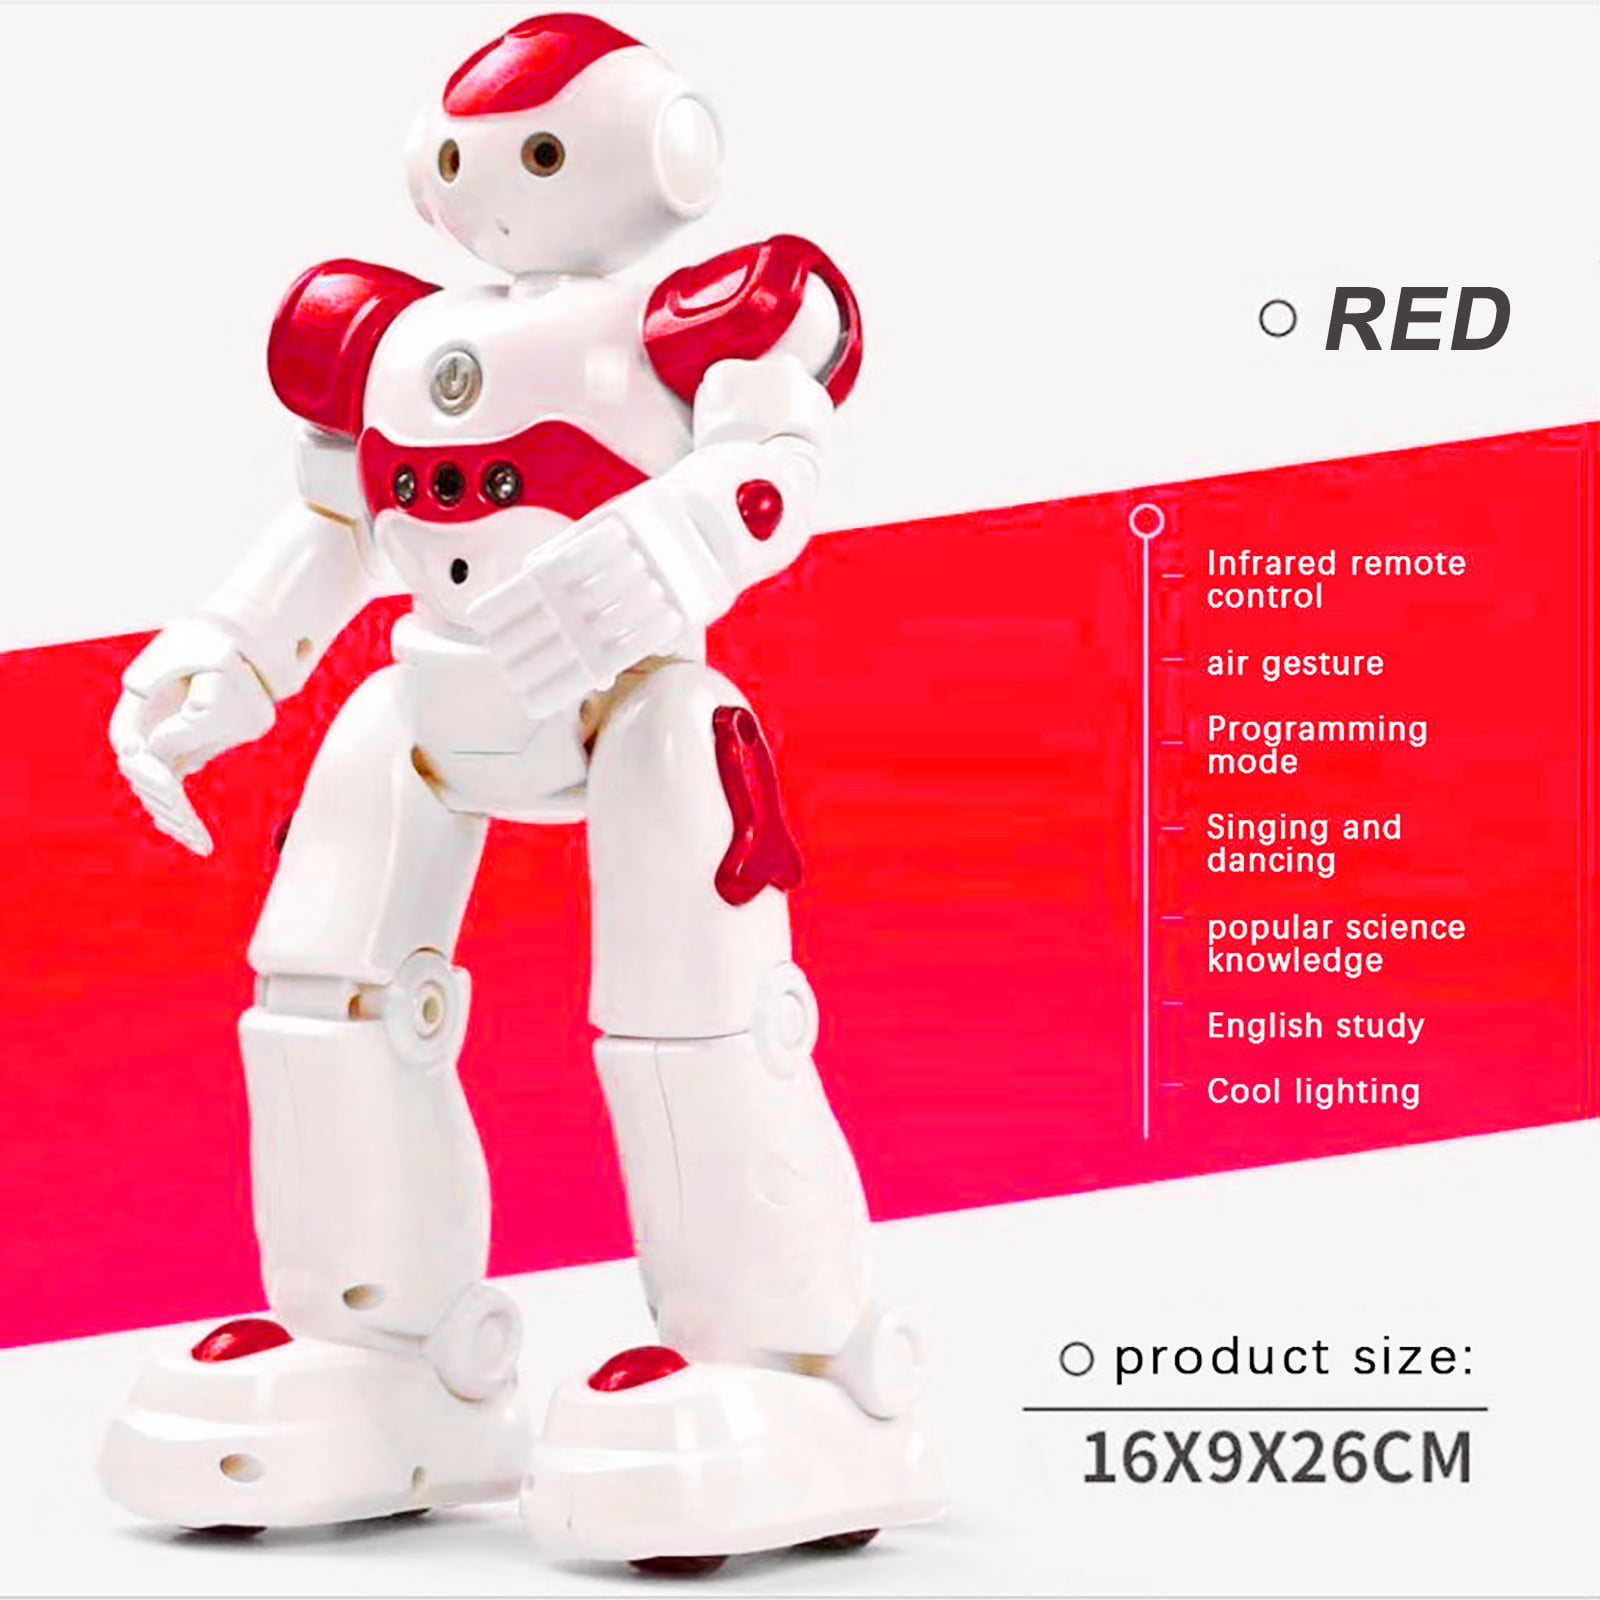 Eholder Rc Robot Toy Smart Robot Toys For Kids Programmable Intelligent Walkin 